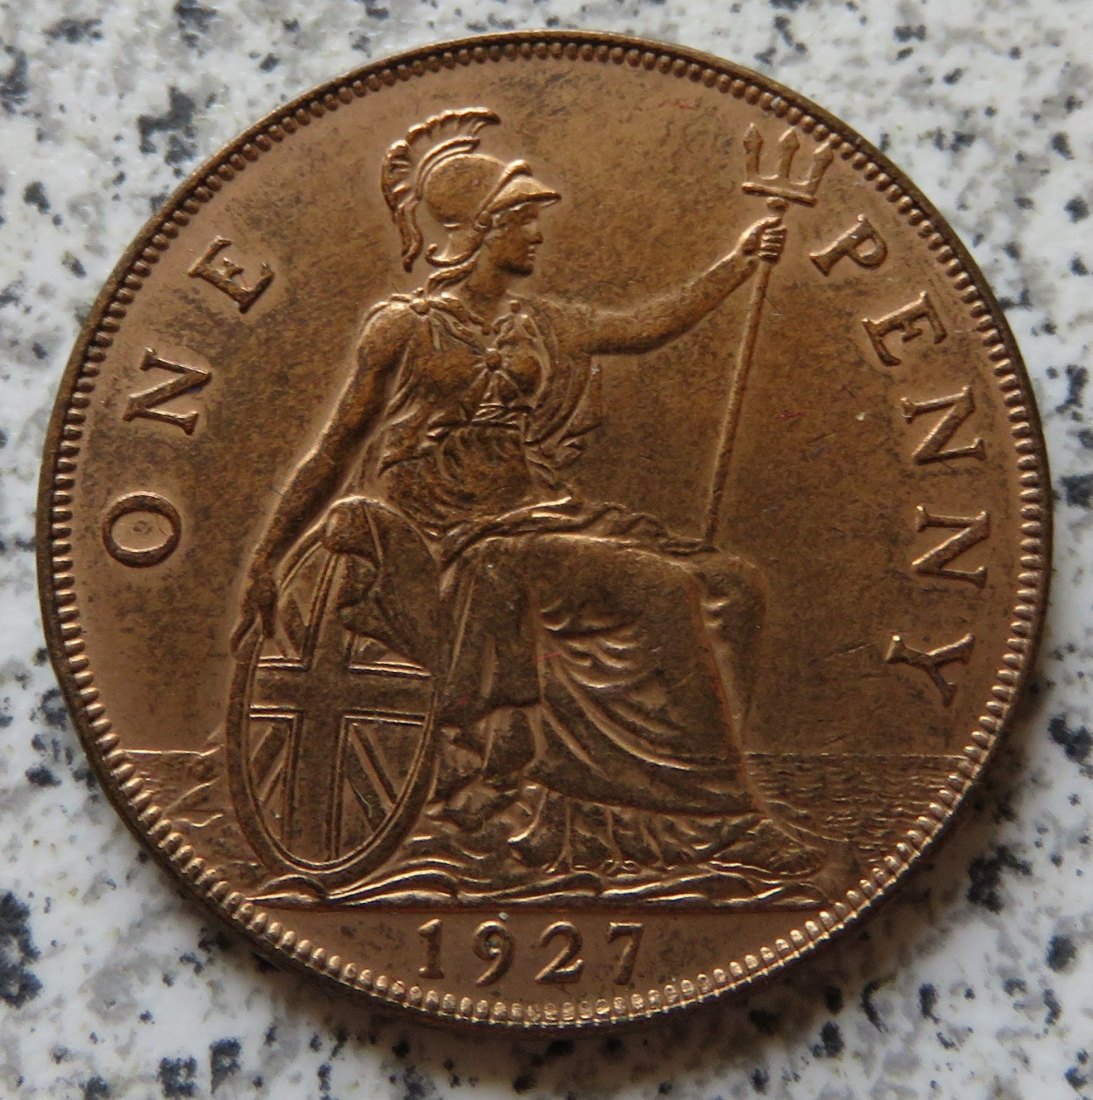  Großbritannien One Penny 1927   